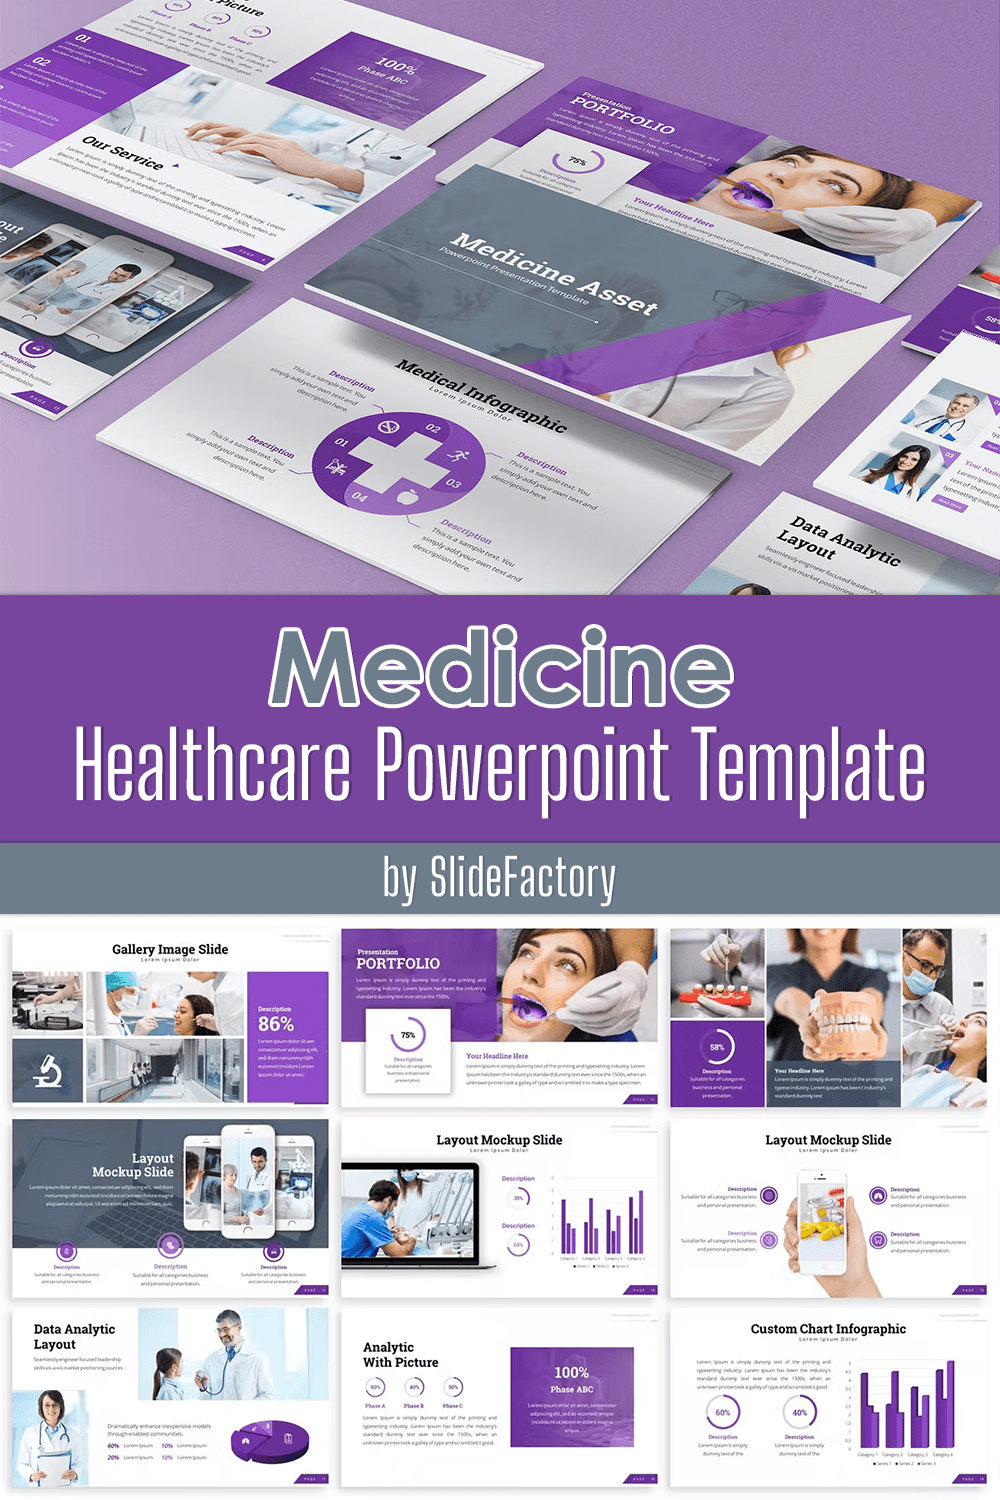 Medicine - Healthcare Powerpoint Template.